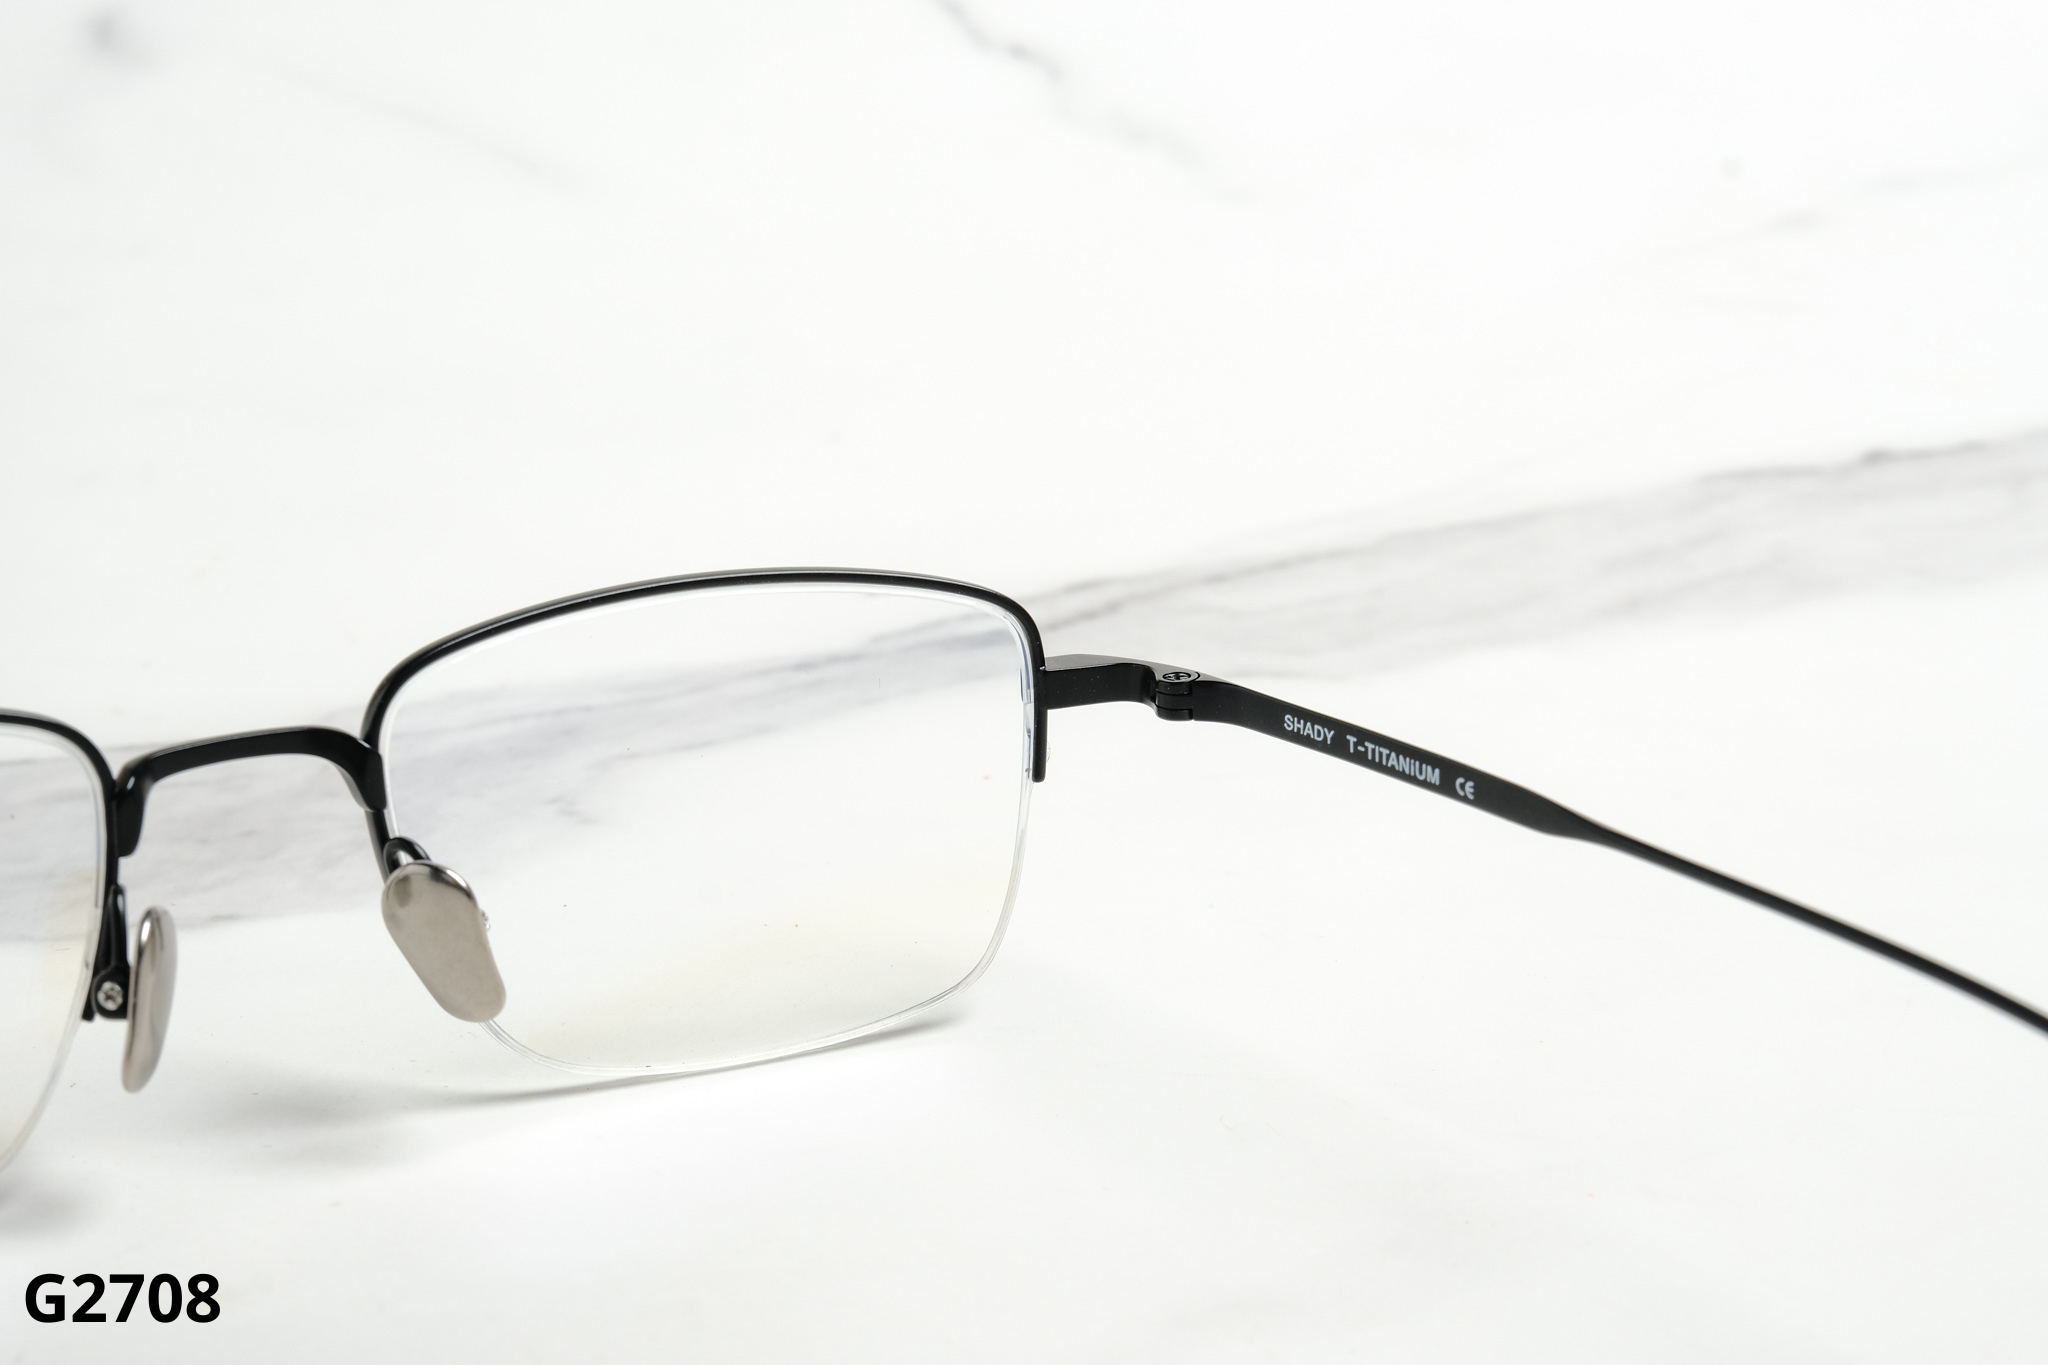  SHADY Eyewear - Glasses - G2708 